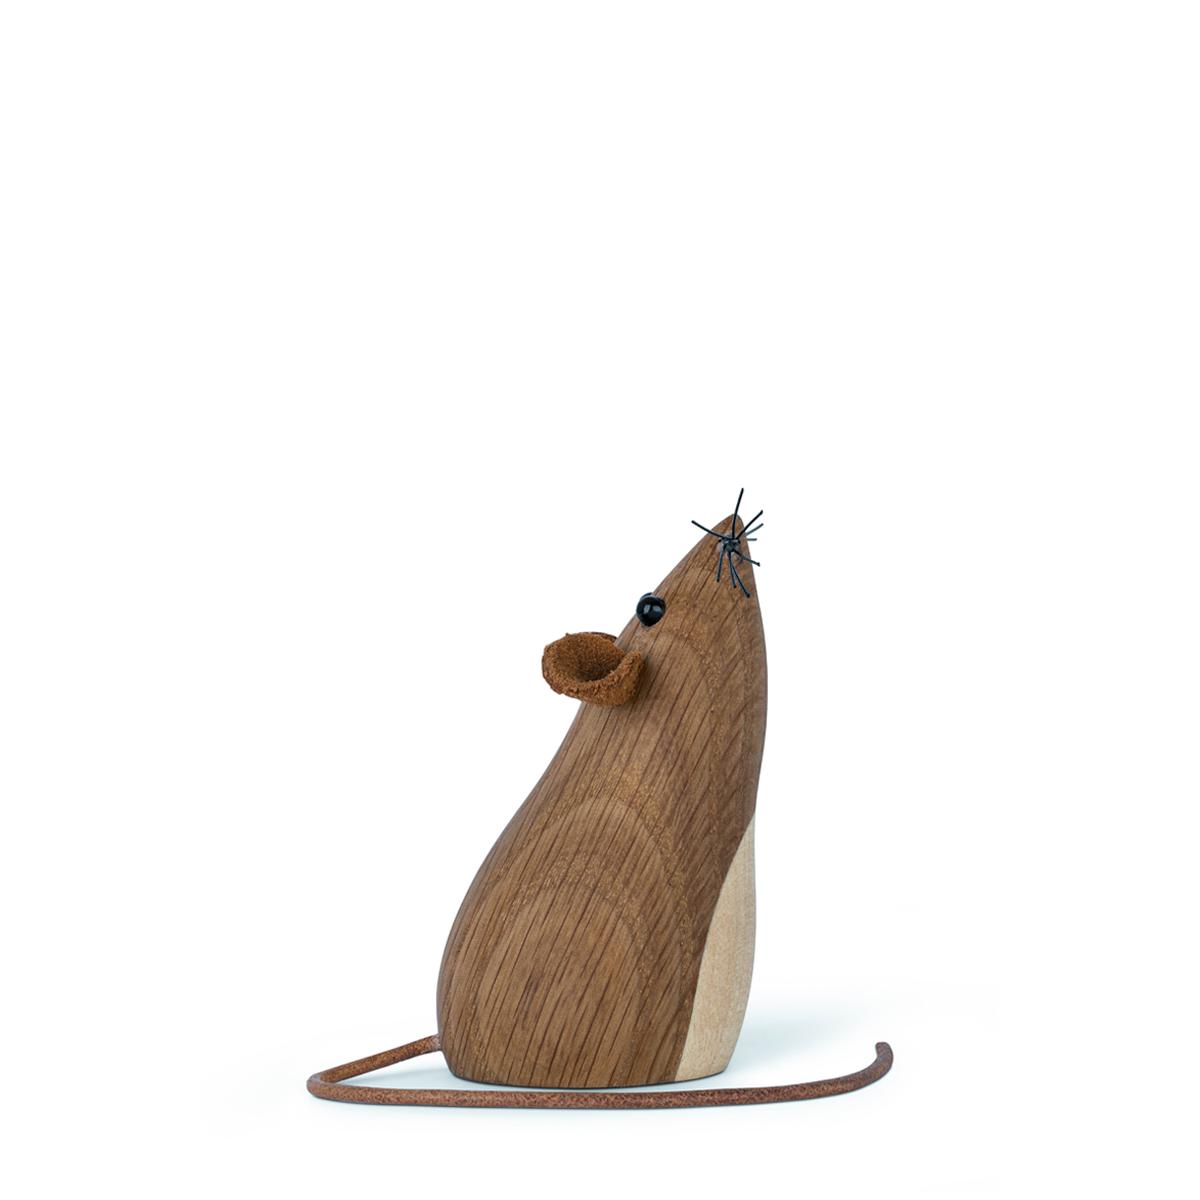 Gunnar Flørning Houten figuur van muizen, 7 cm